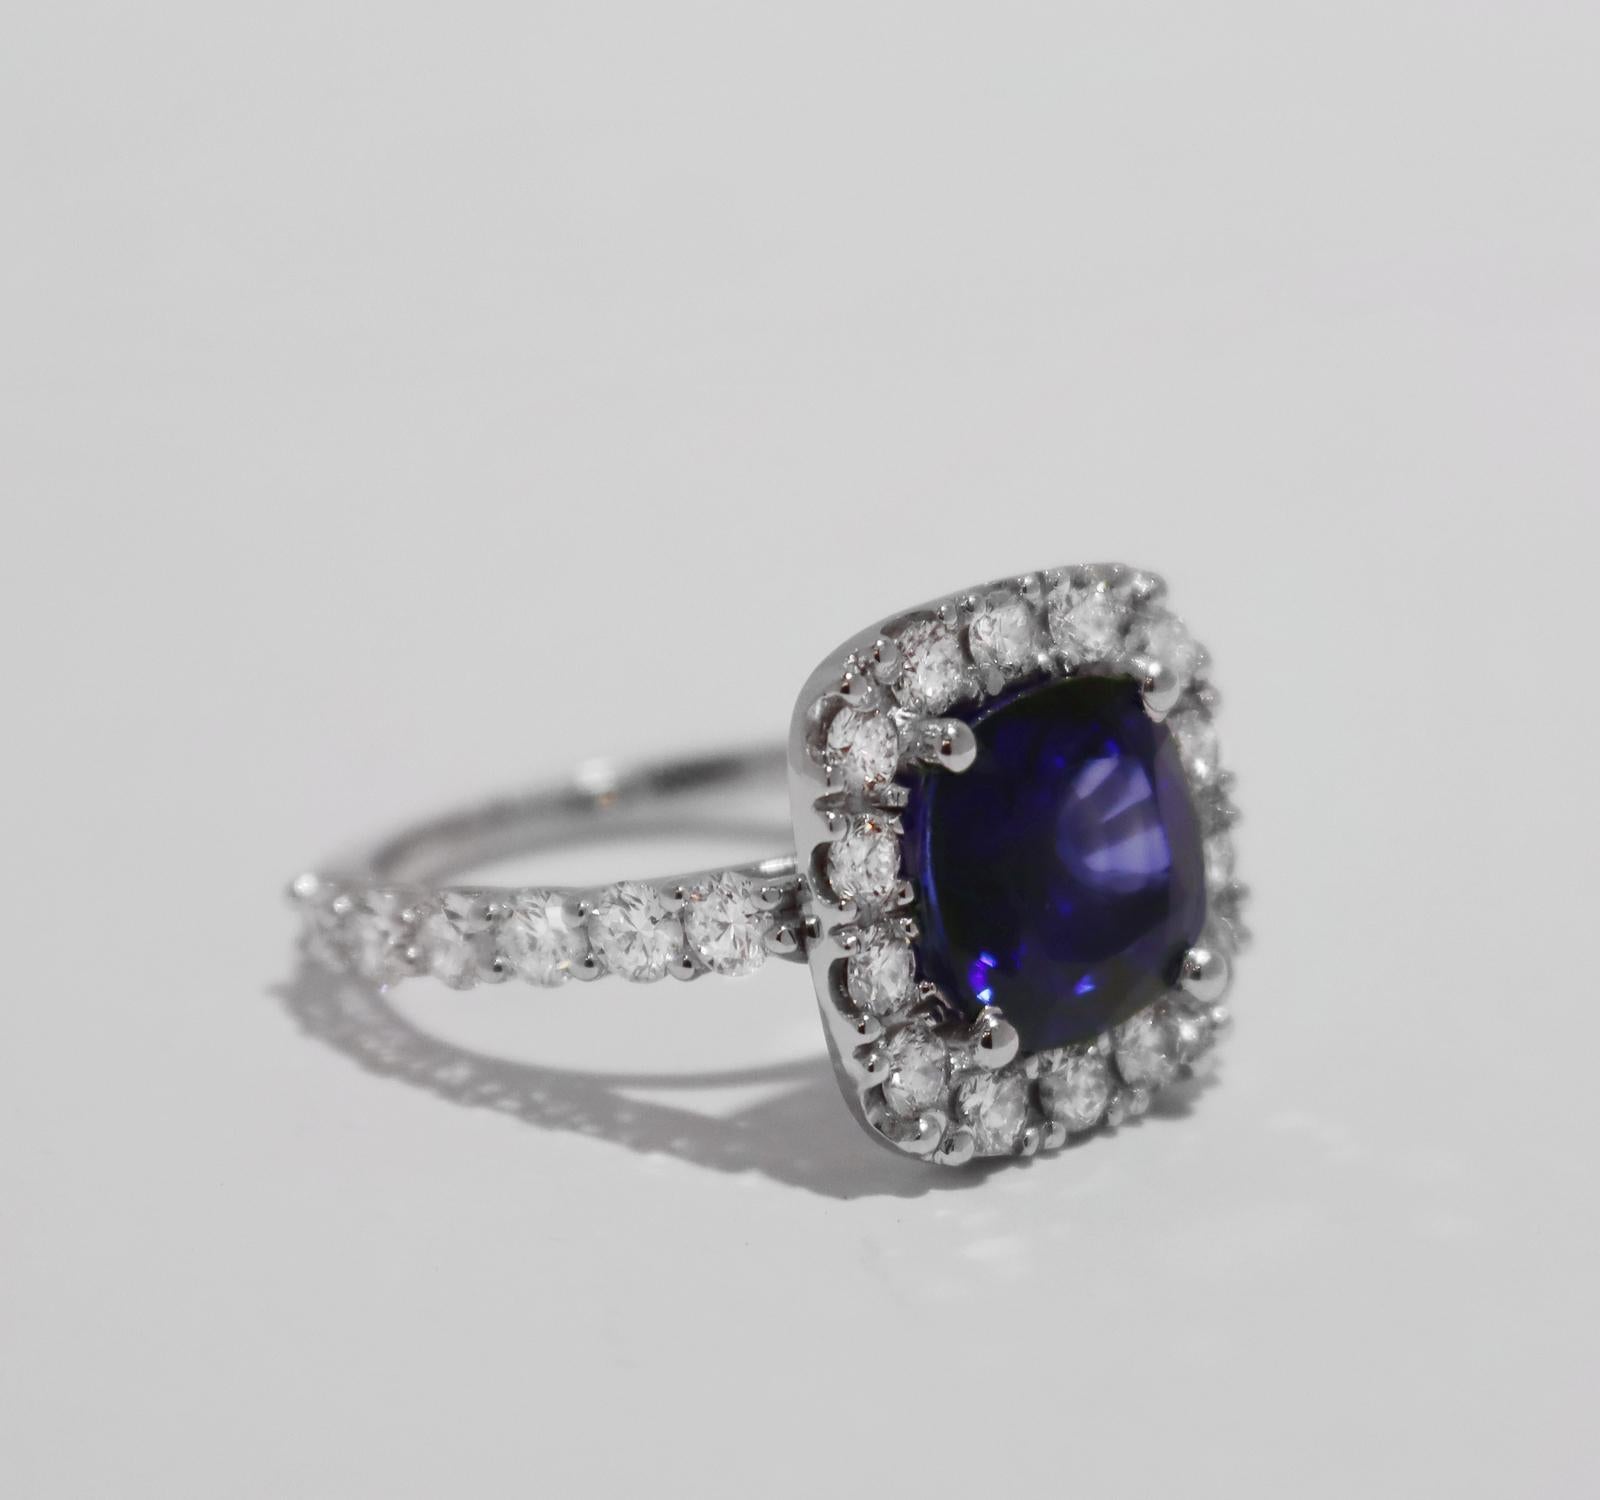 BLUE SAPPHIRE RING WITH DIAMONDS IN WHITE GOLD 

14k White gold
Ring size: 8
Sapphire: 5.98ct, 10x10mm
Diamonds: 2.4ct, VS clarity, E-F color

Retail: $7,900